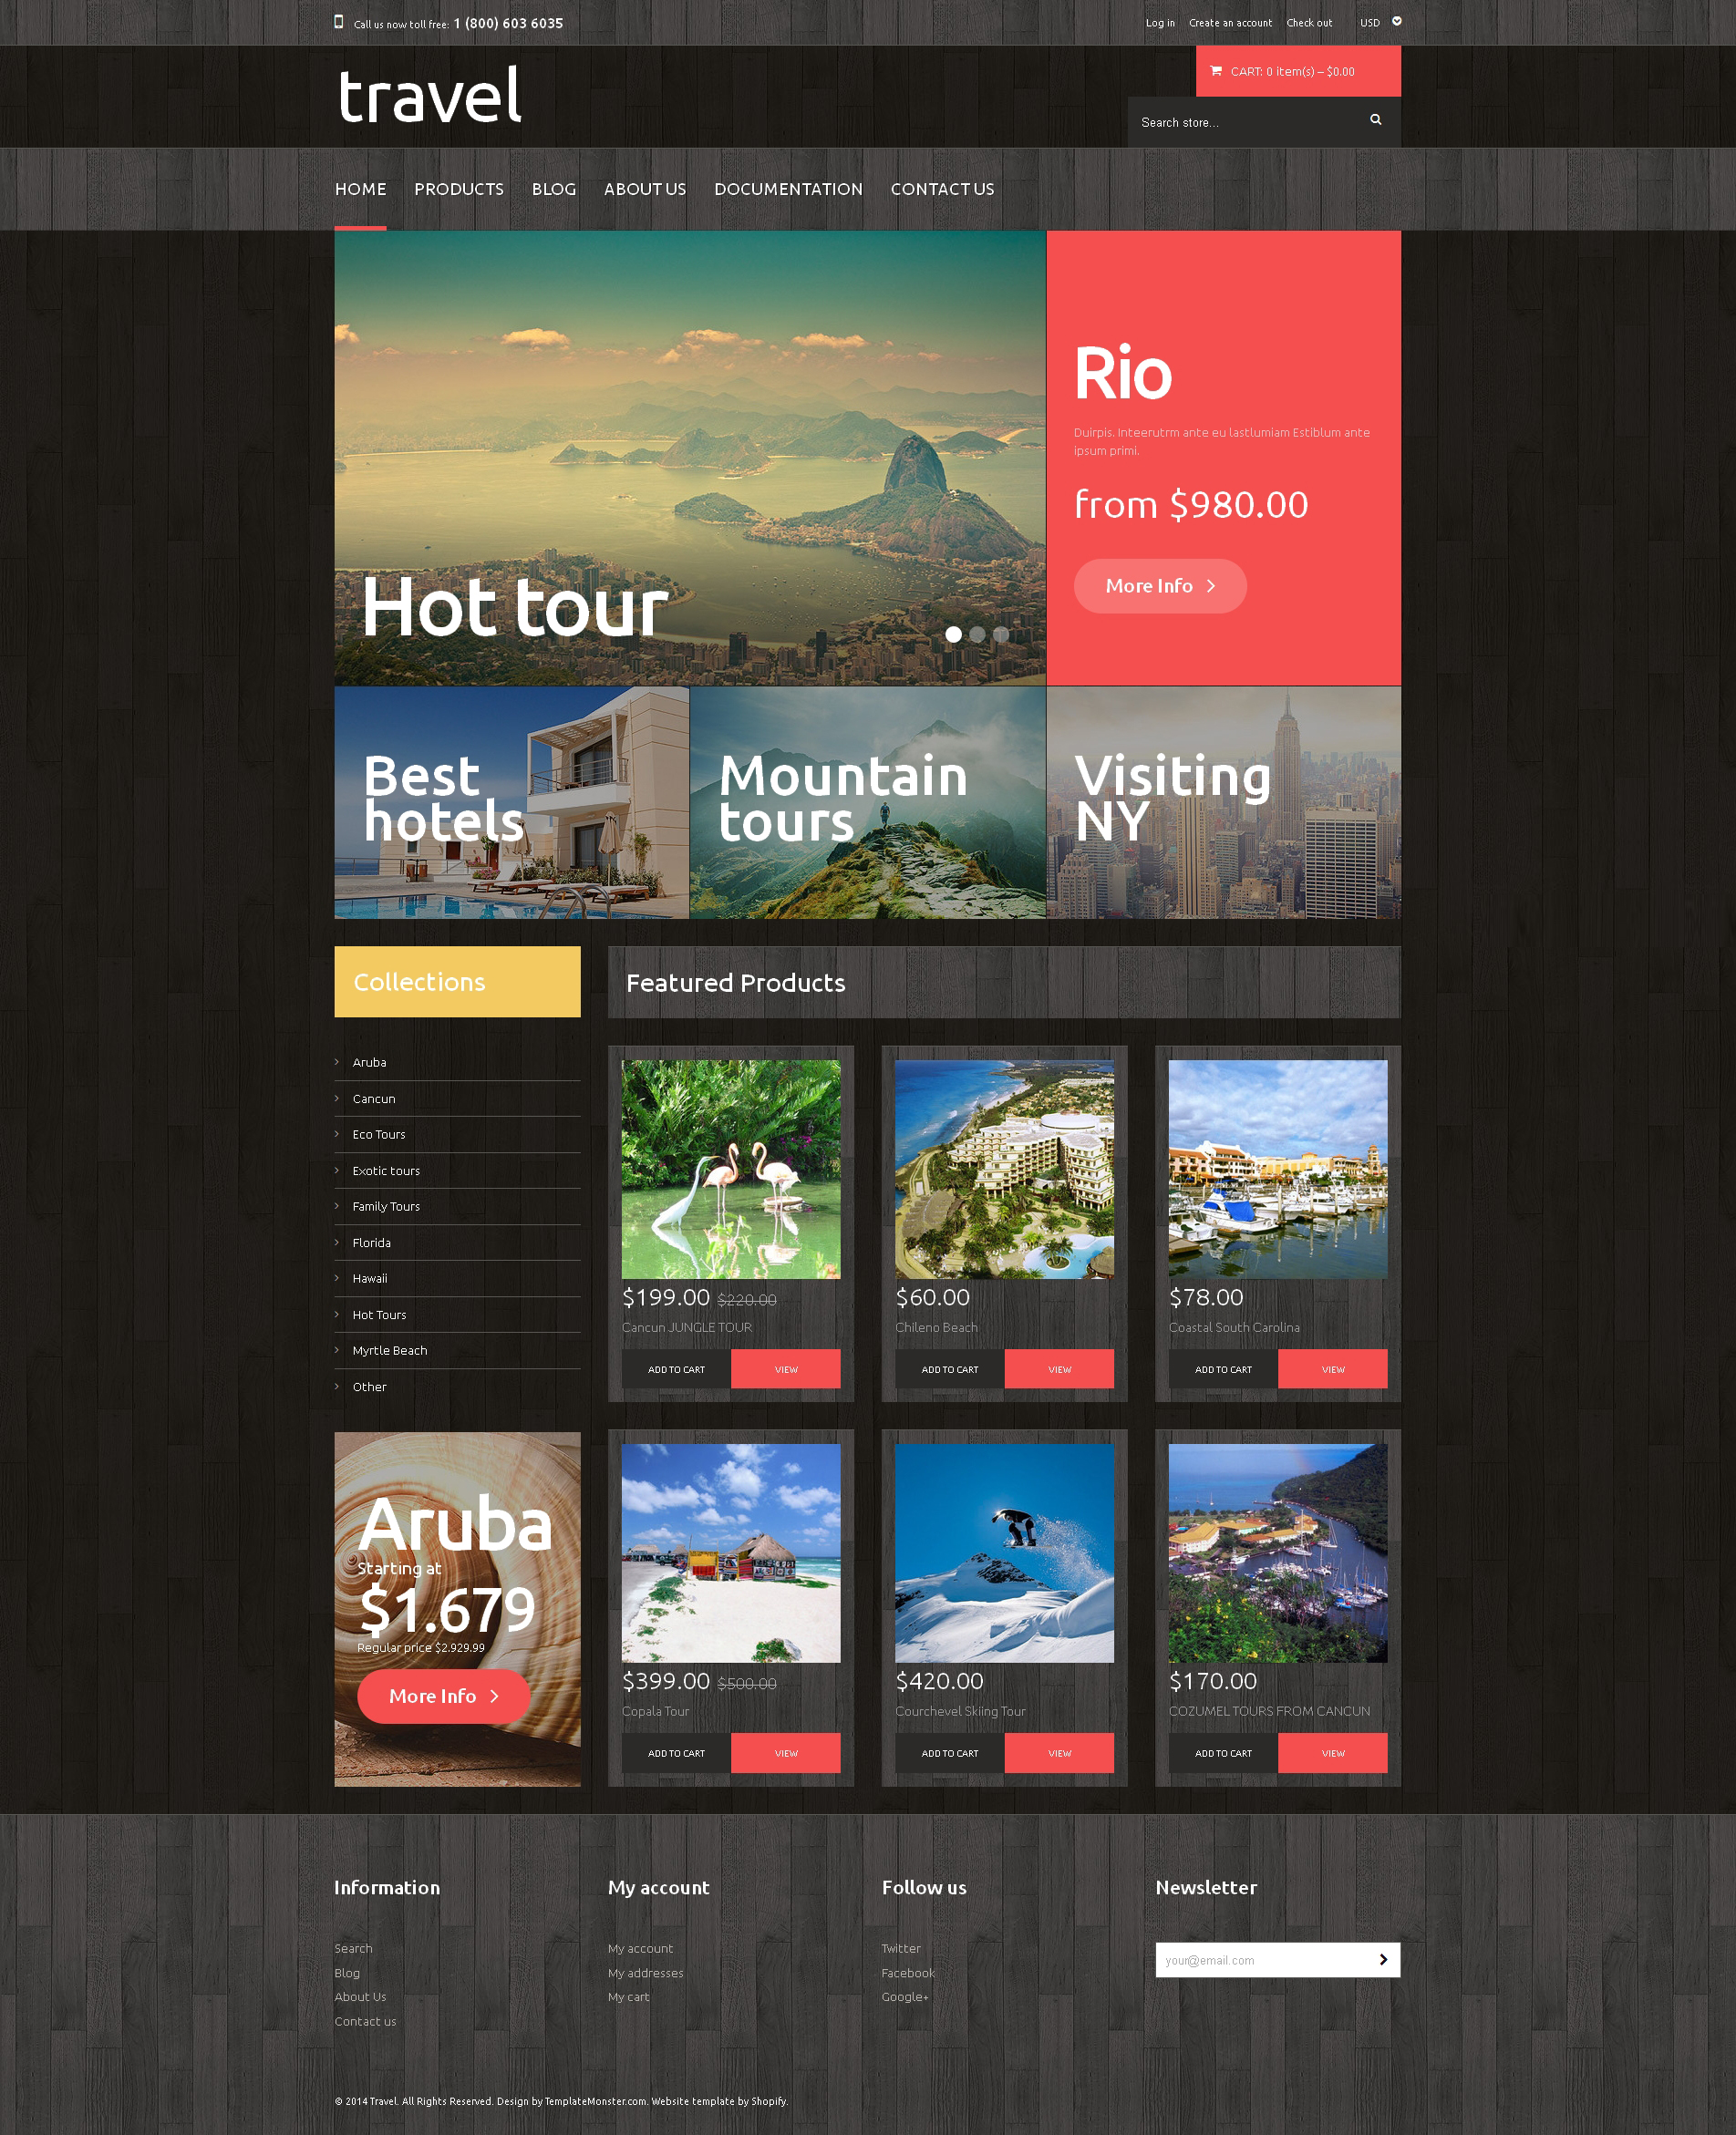 Vista Voyage - Travel Agency Responsive Online Store 2.0 Shopify Theme